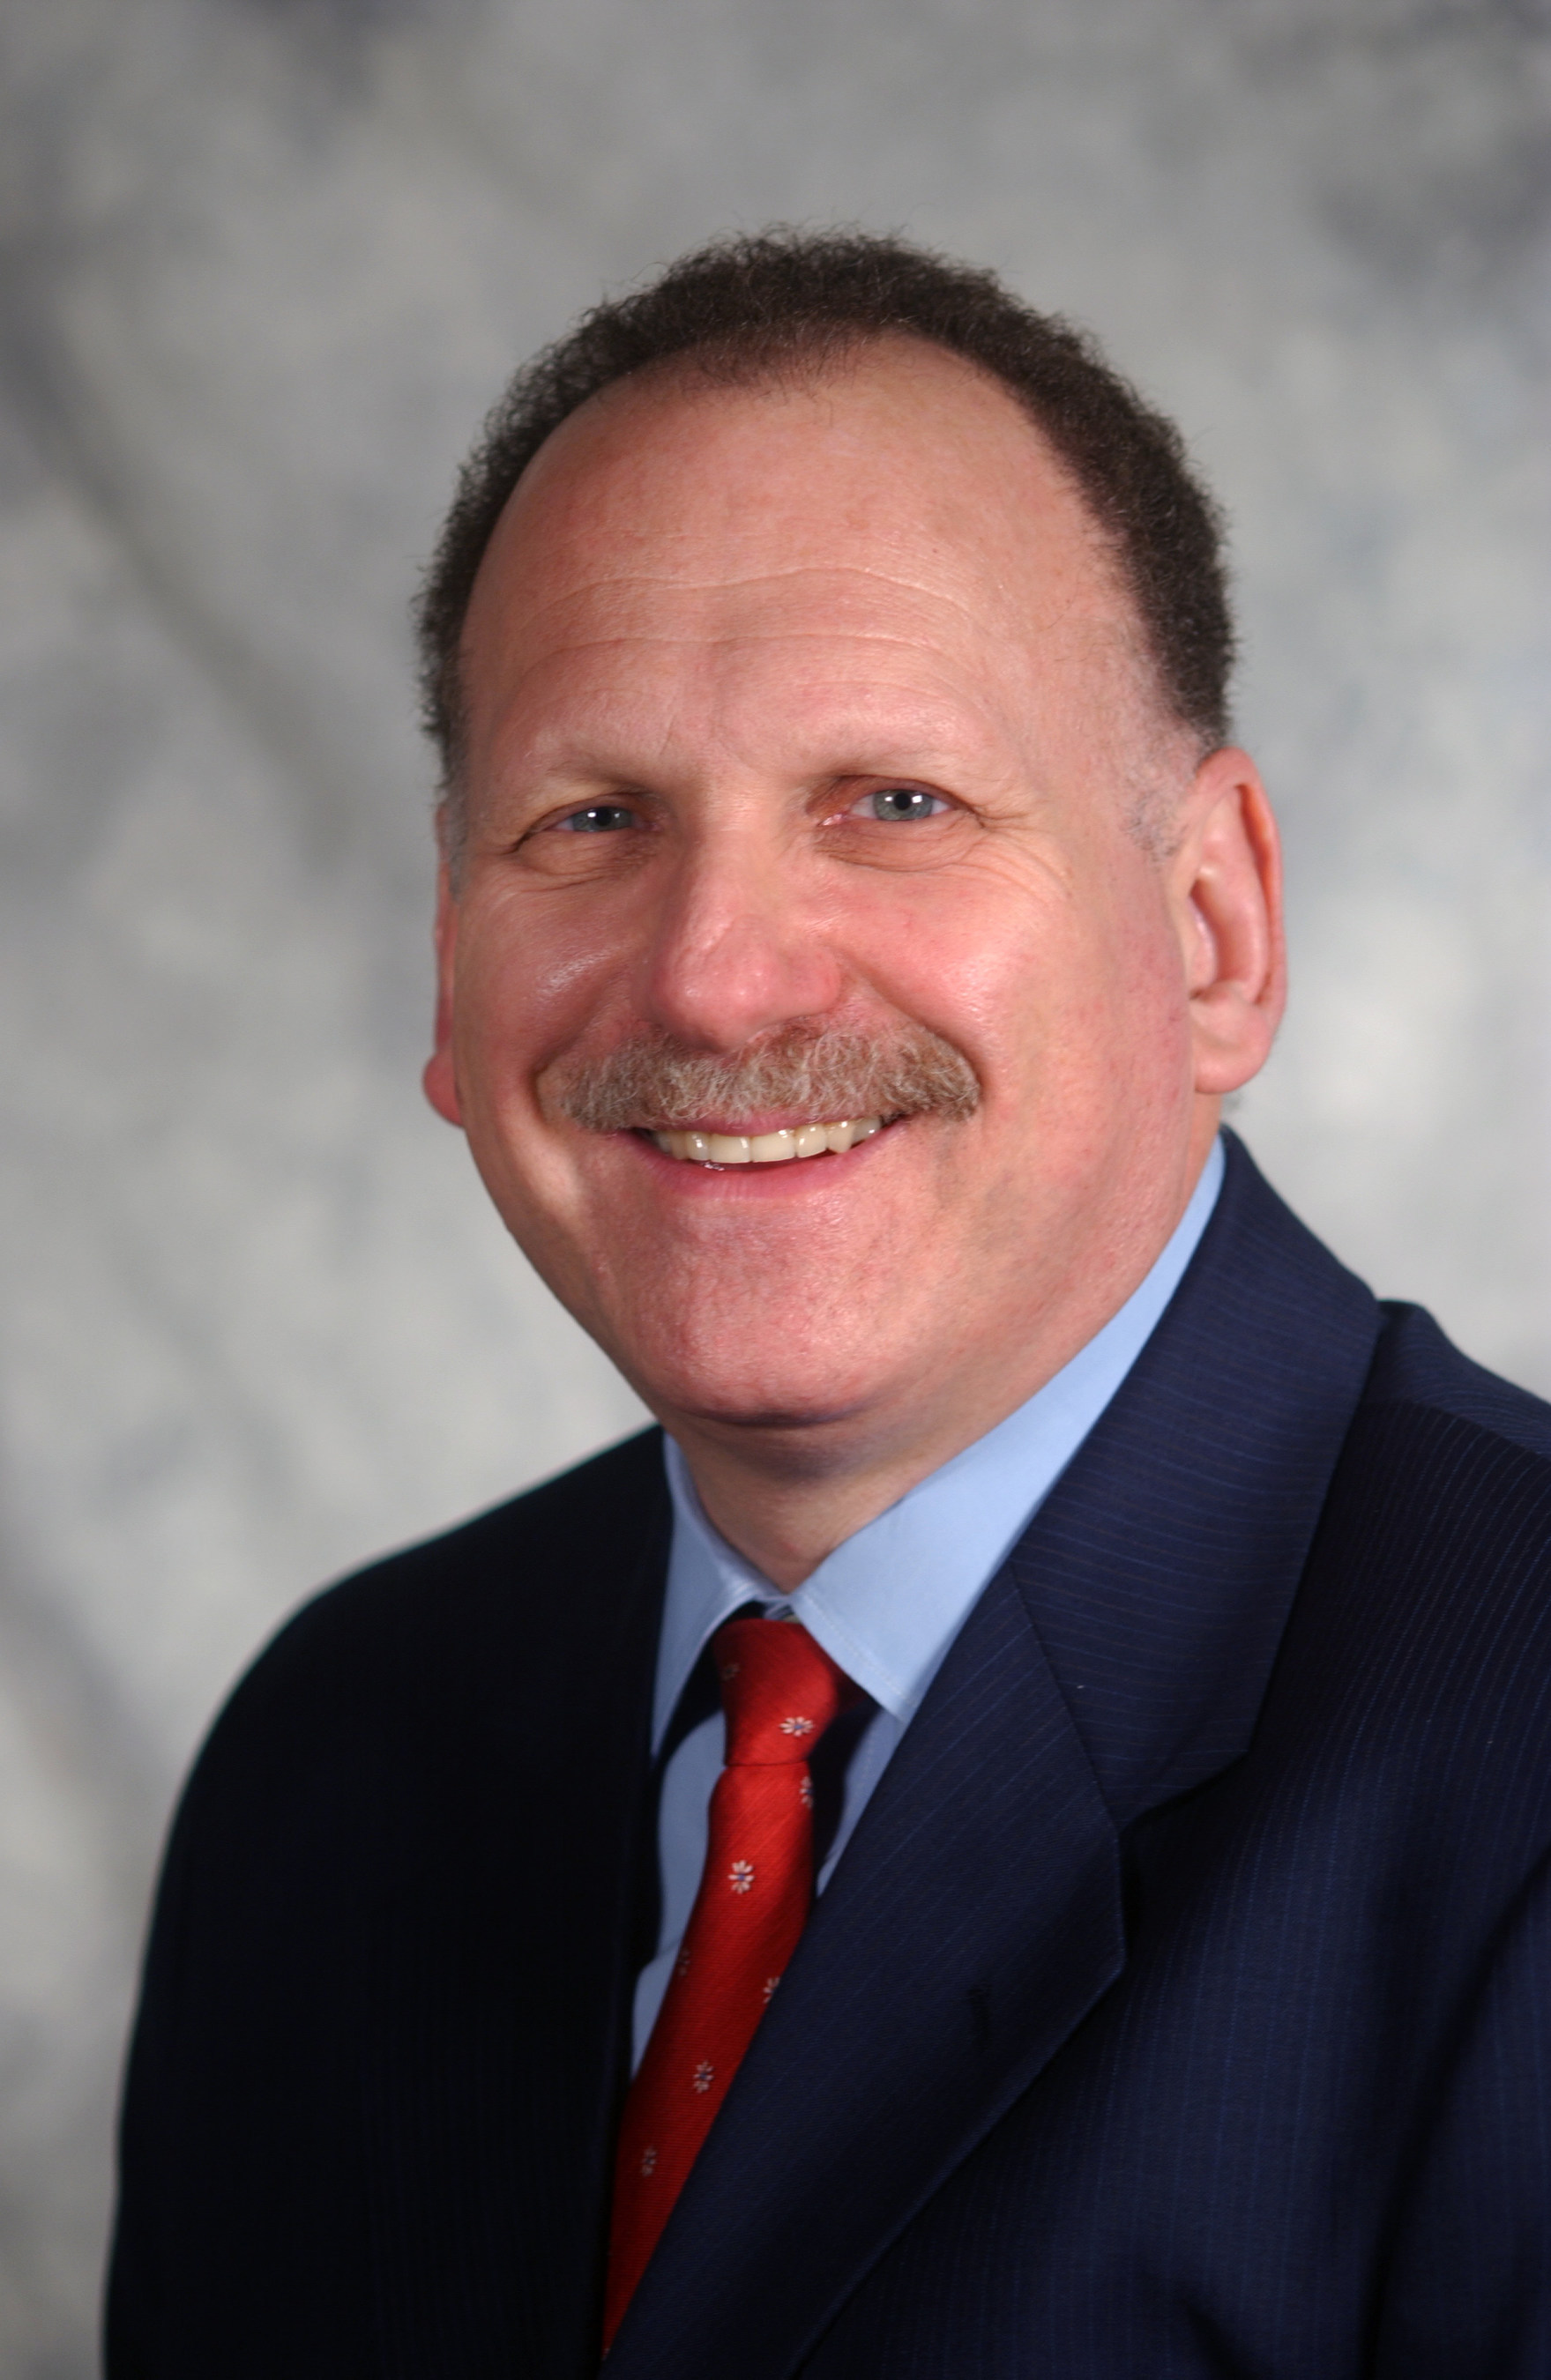 Henry R. Kranzler, M.D., Director, Center for Studies of Addiction at the University of Pennsylvania Perelman School of Medicine